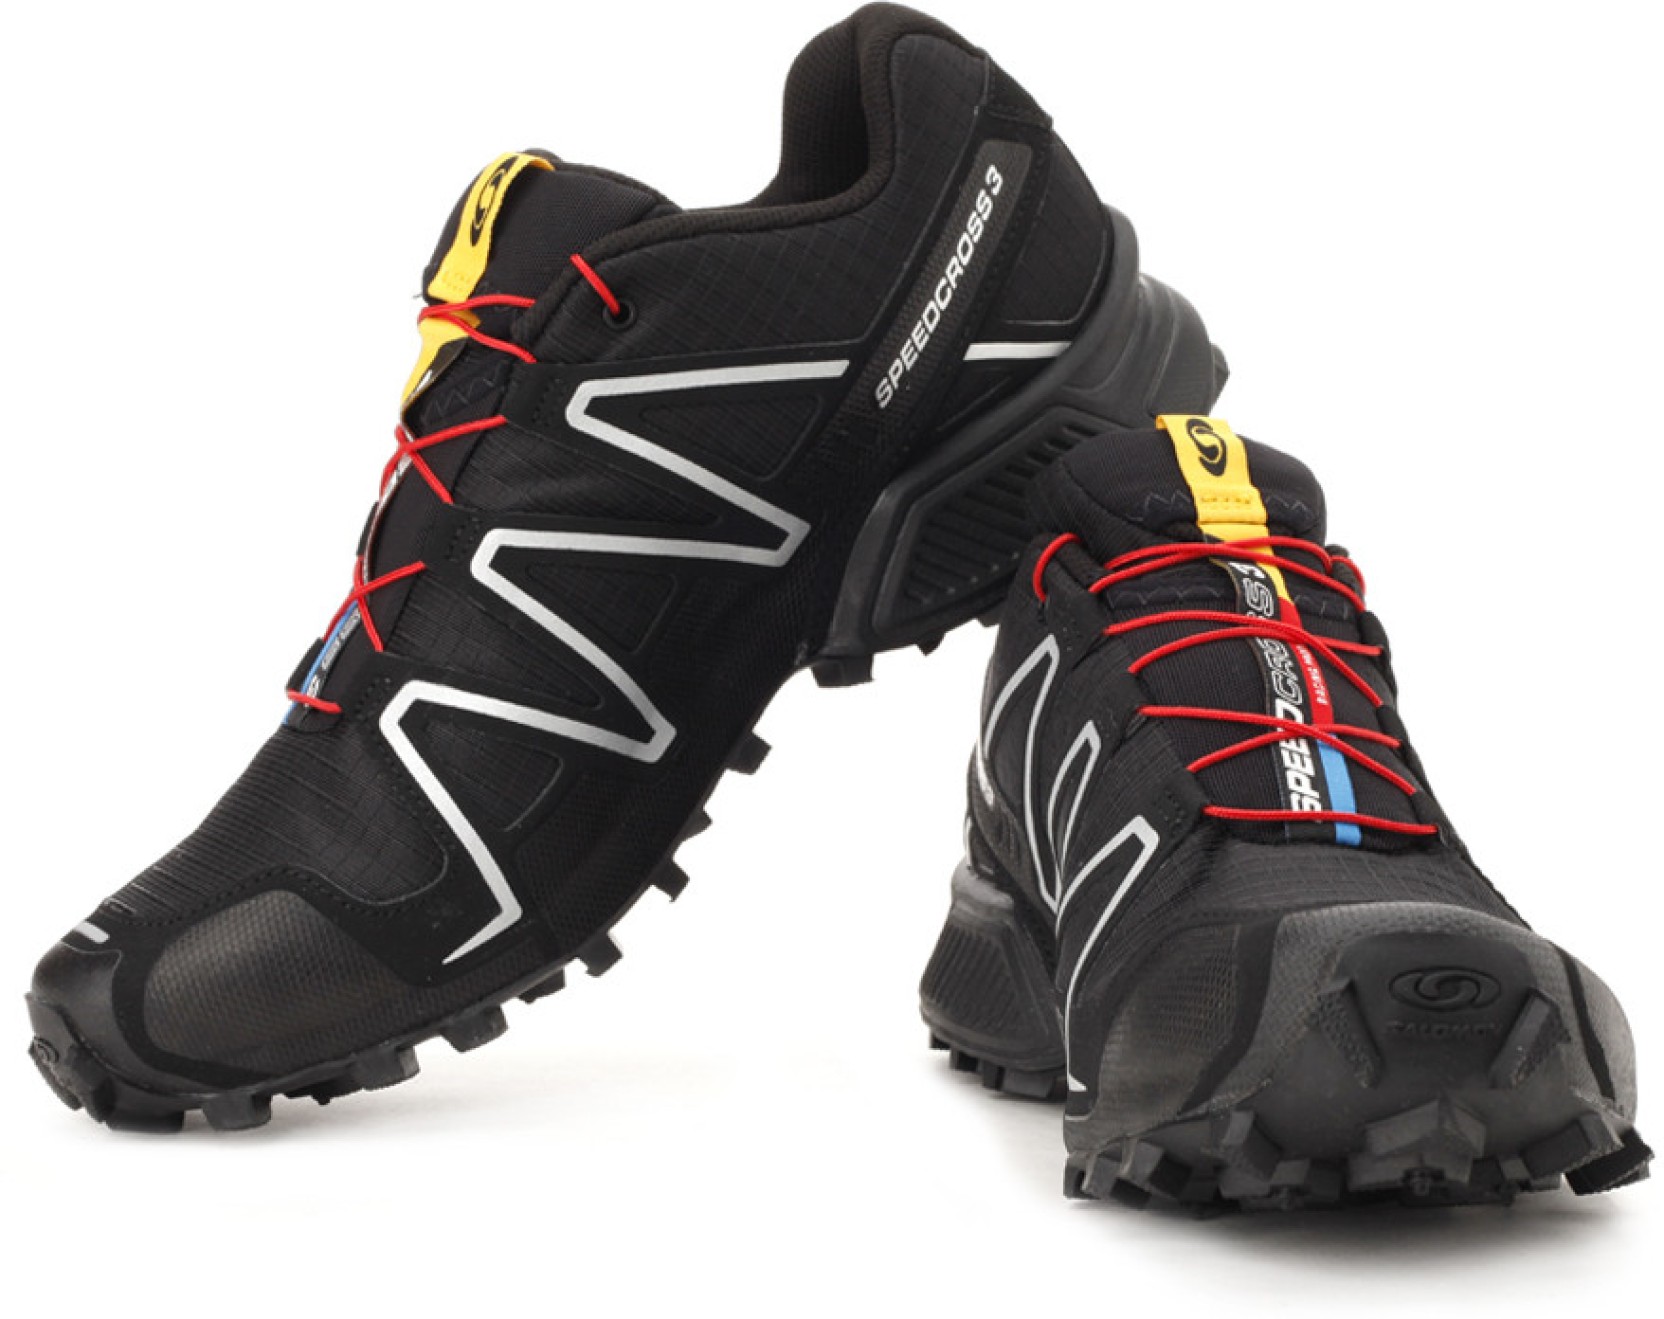 Salomon Speedcross 3 Mountain Trail Running Shoes - Buy Black Color ...